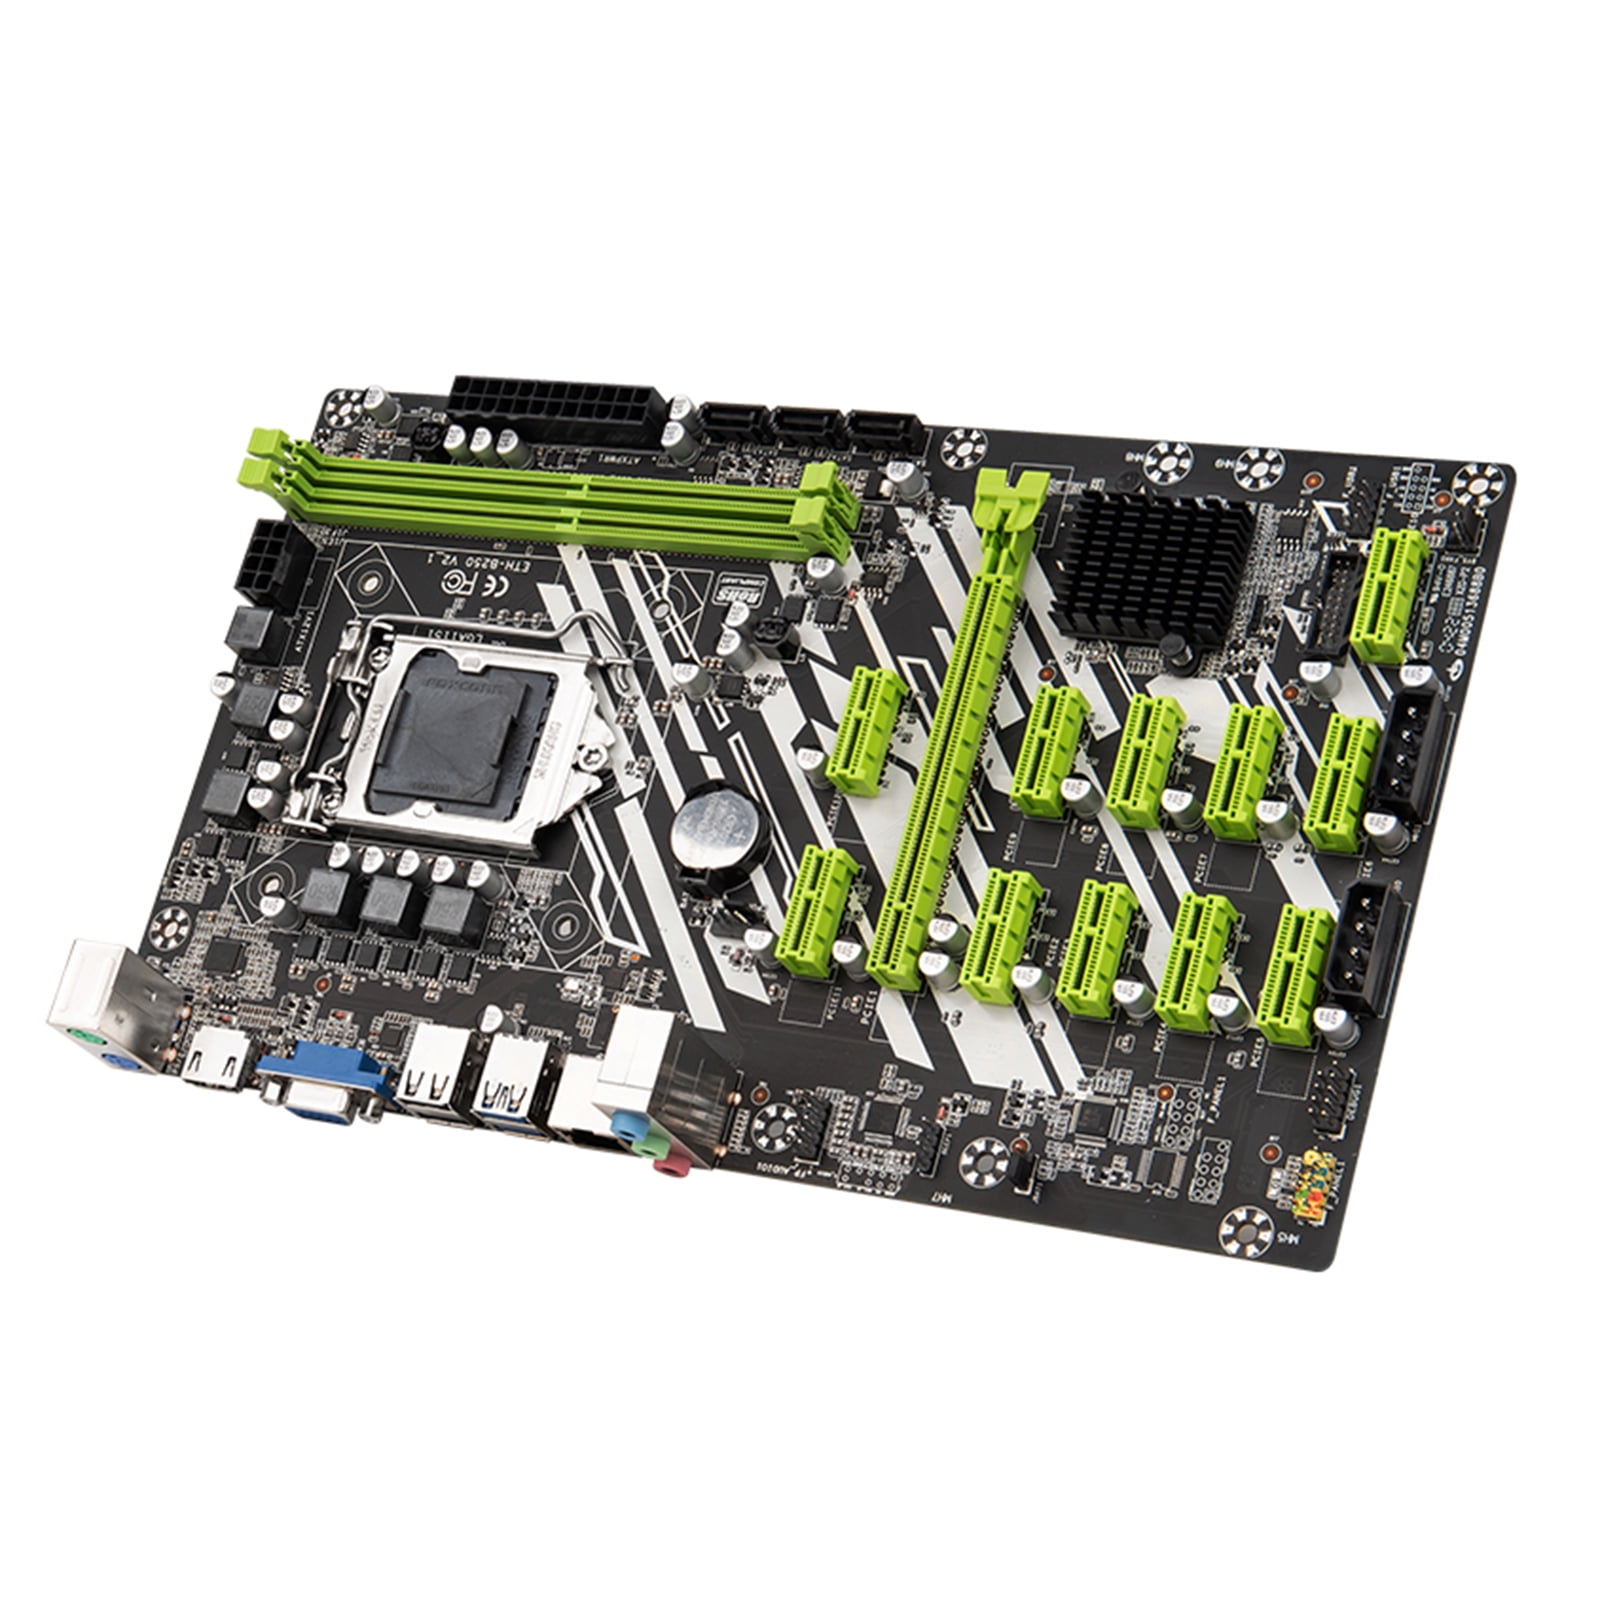 ETH-B250 Mining Motherboard 12P PCI-E LGA Graphics Card Miner - Walmart.com